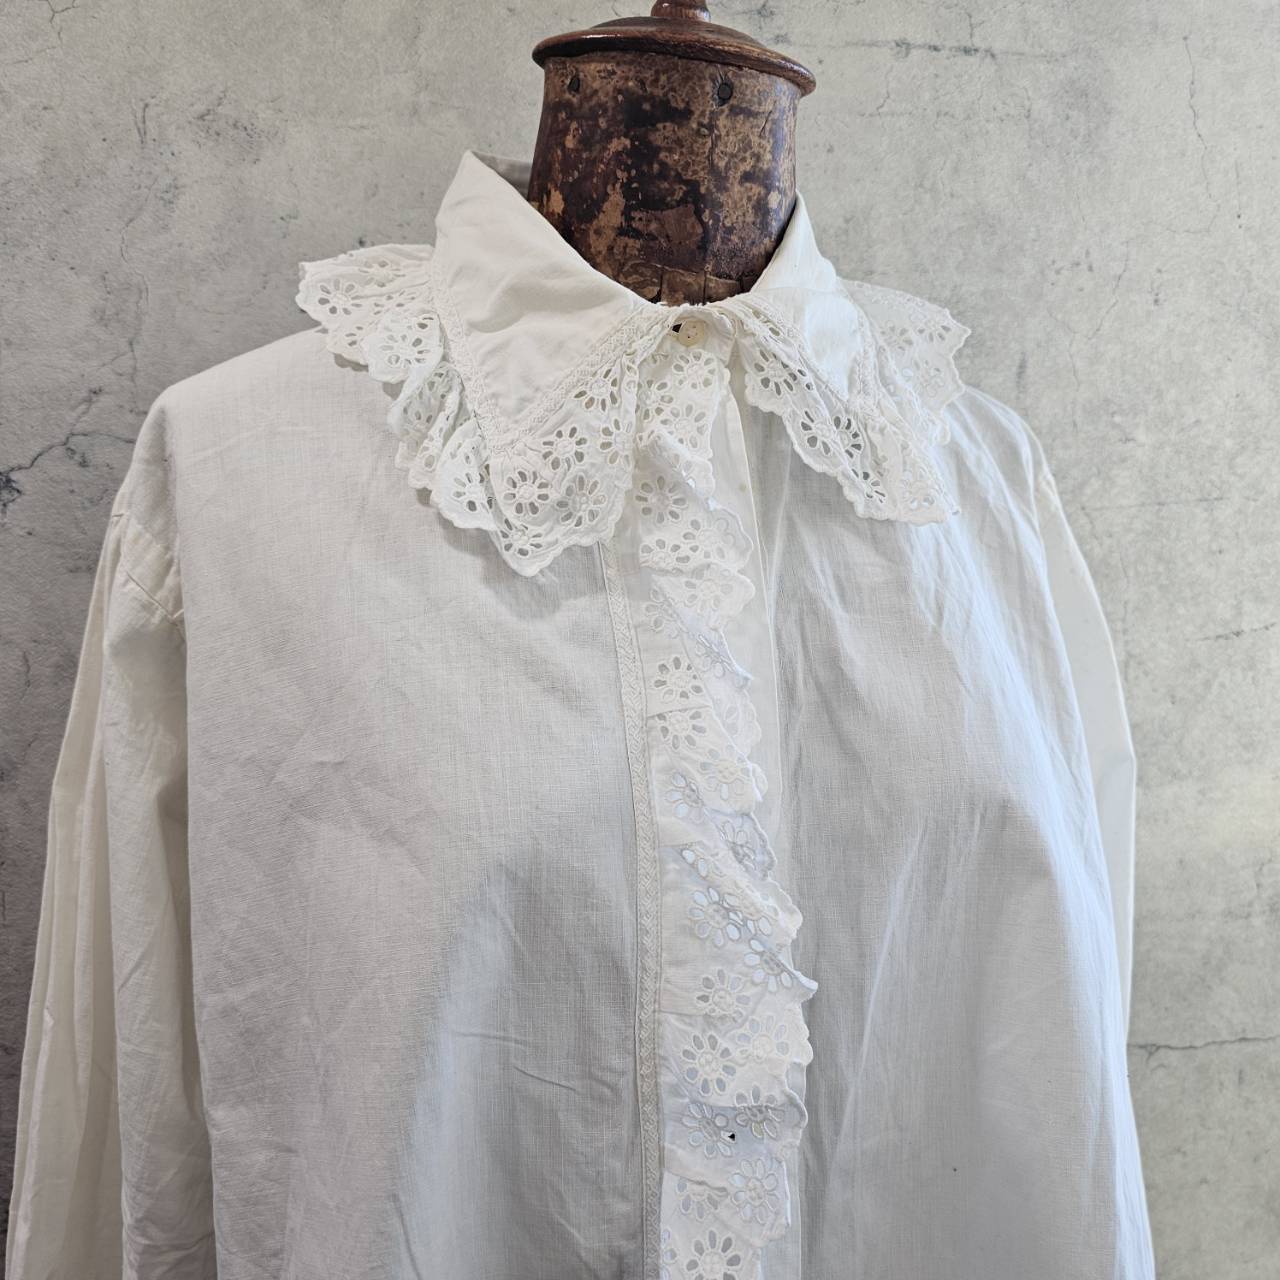 Euro Vintage(ヨーロッパヴィンテージ) tournesol_10'~20's french cotton floral  embroidery blouse/フレンチコットン花刺繍ブラウス 表記なし(Mサイズ程度) ホワイト 貝ボタン